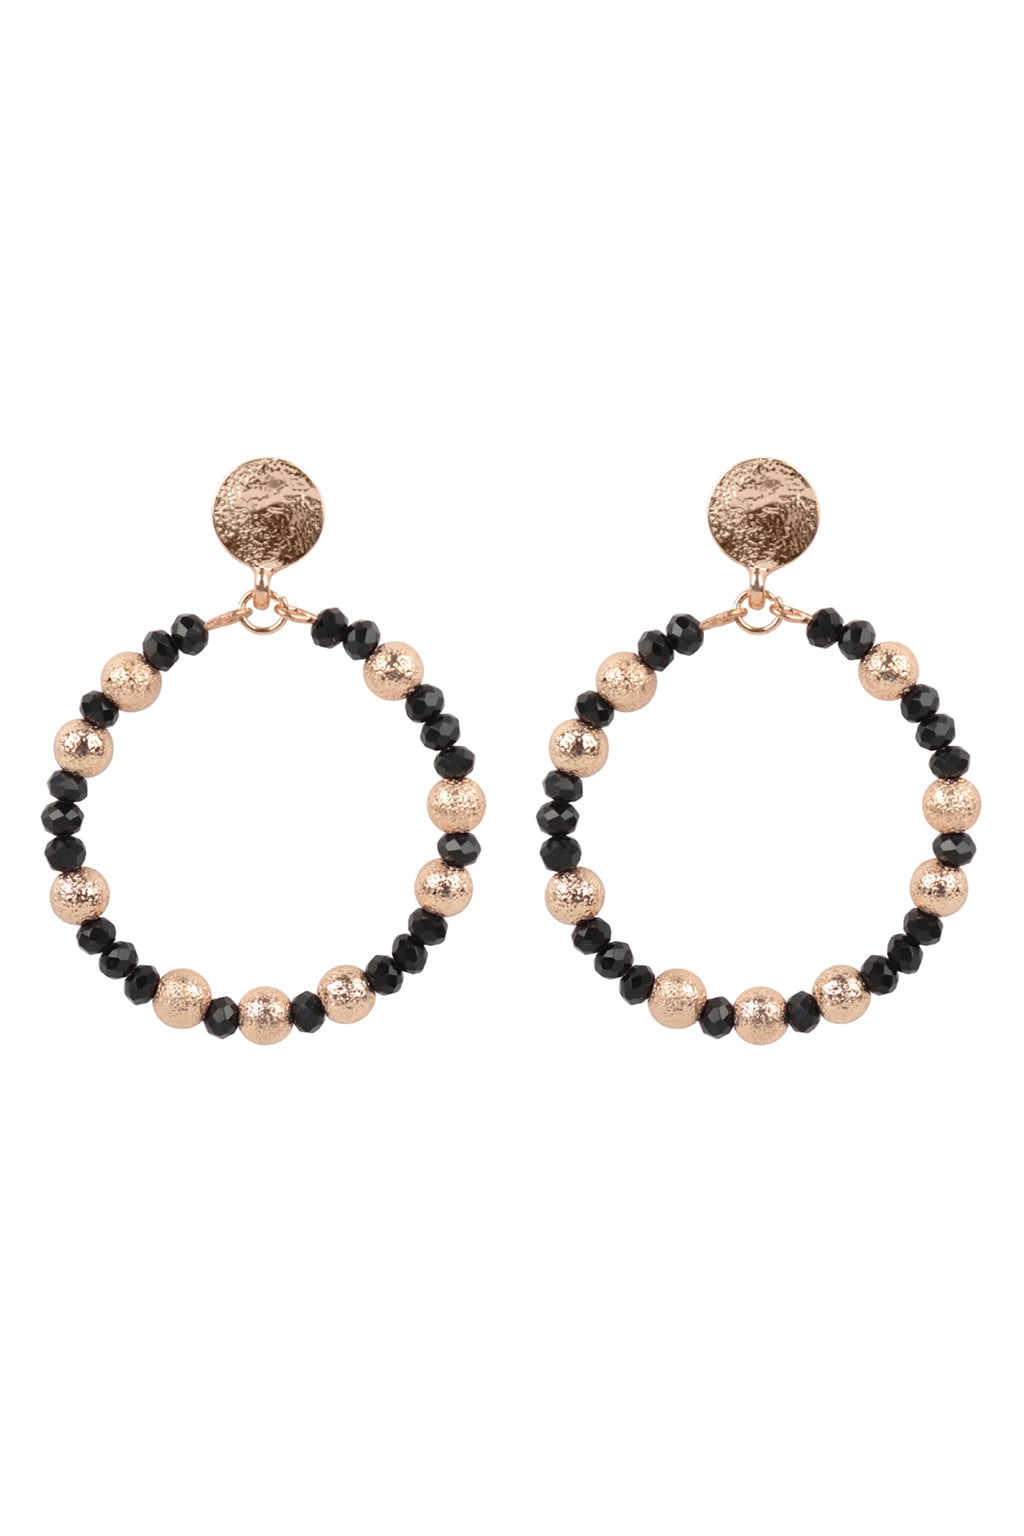 Rondelle Beads Round Post Earrings Black - Pack of 6